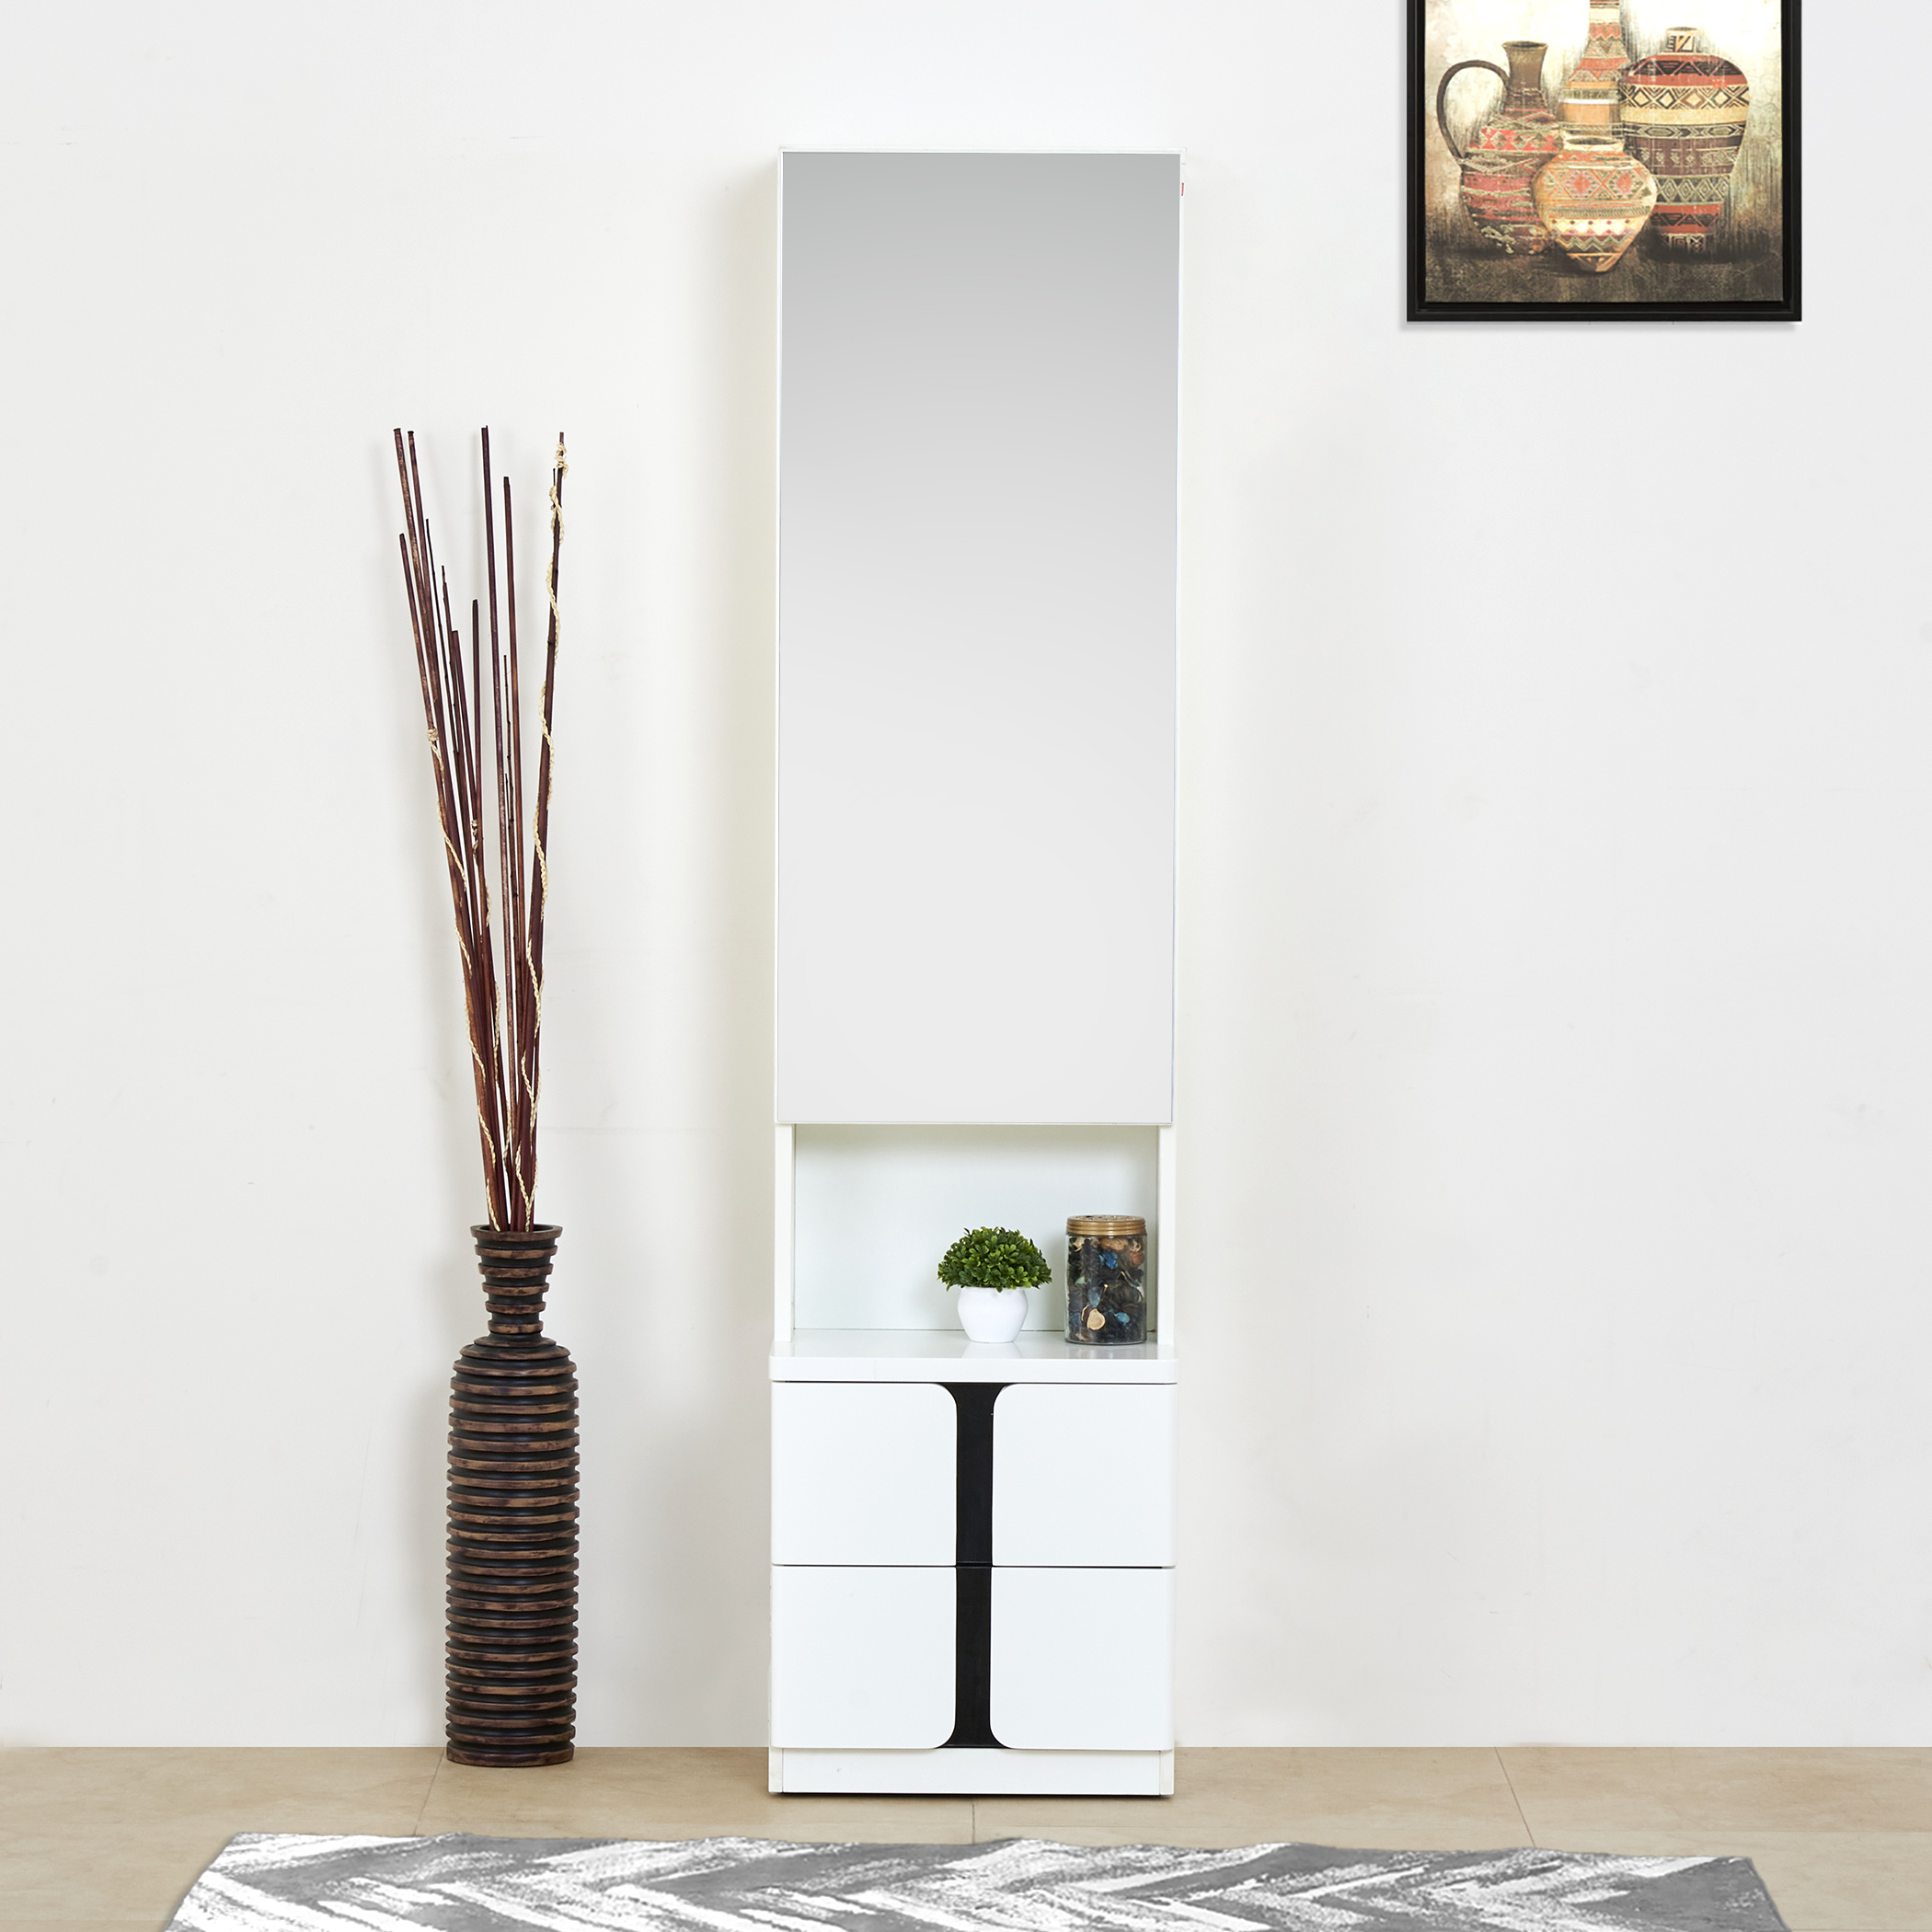 Polaris Dresser Mirror with Drawer - White